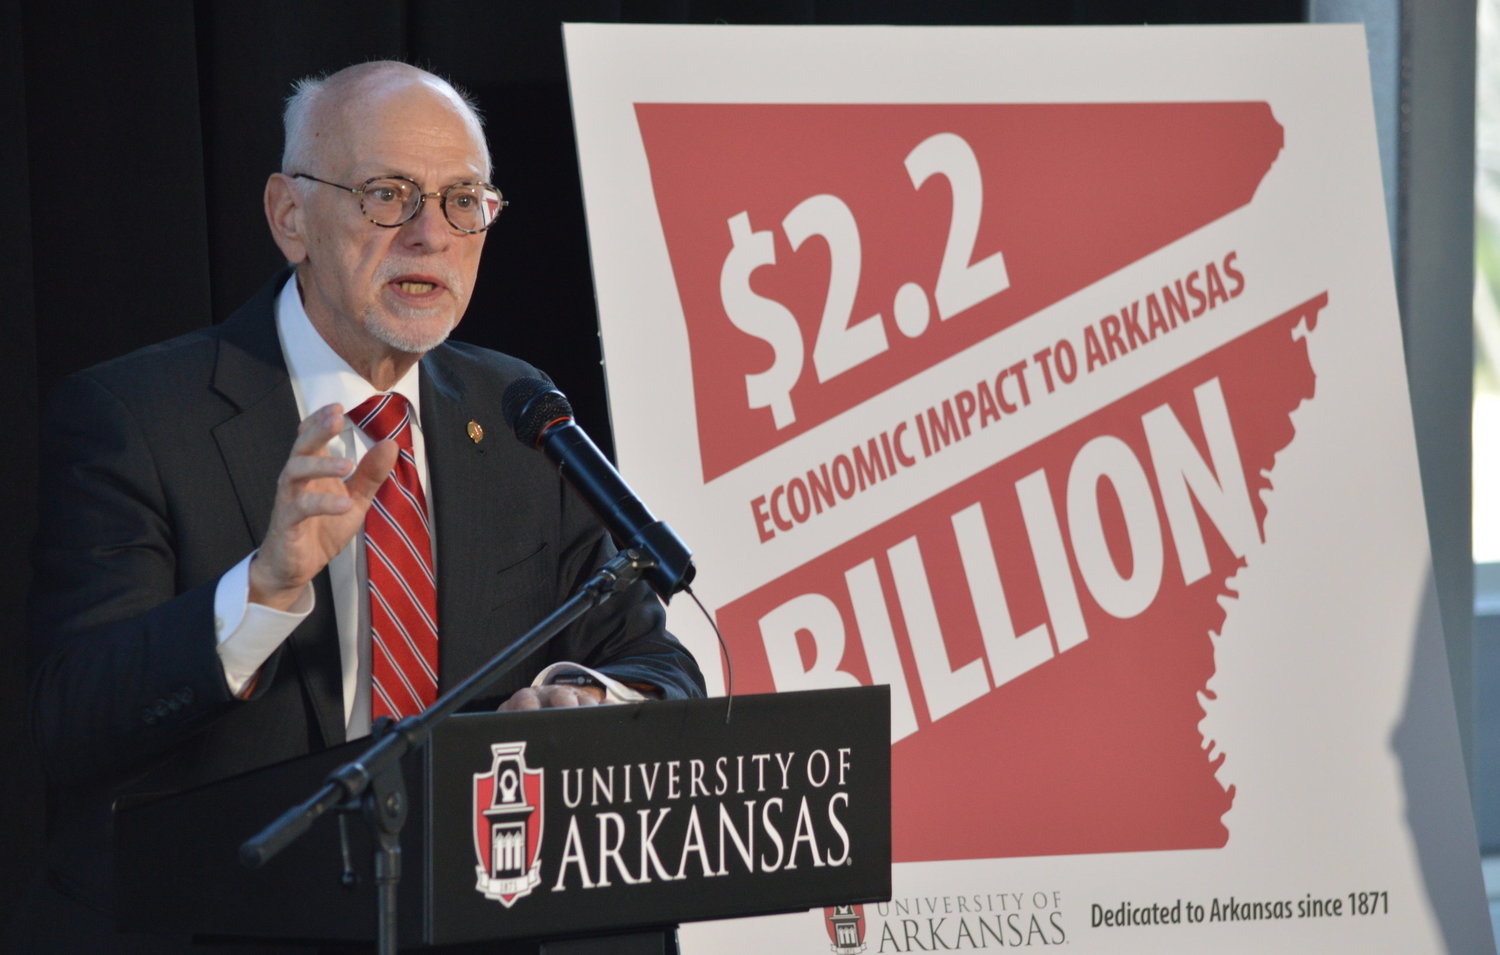 University of Arkansas Economic Impact Swells to $2.2 Billion a Year